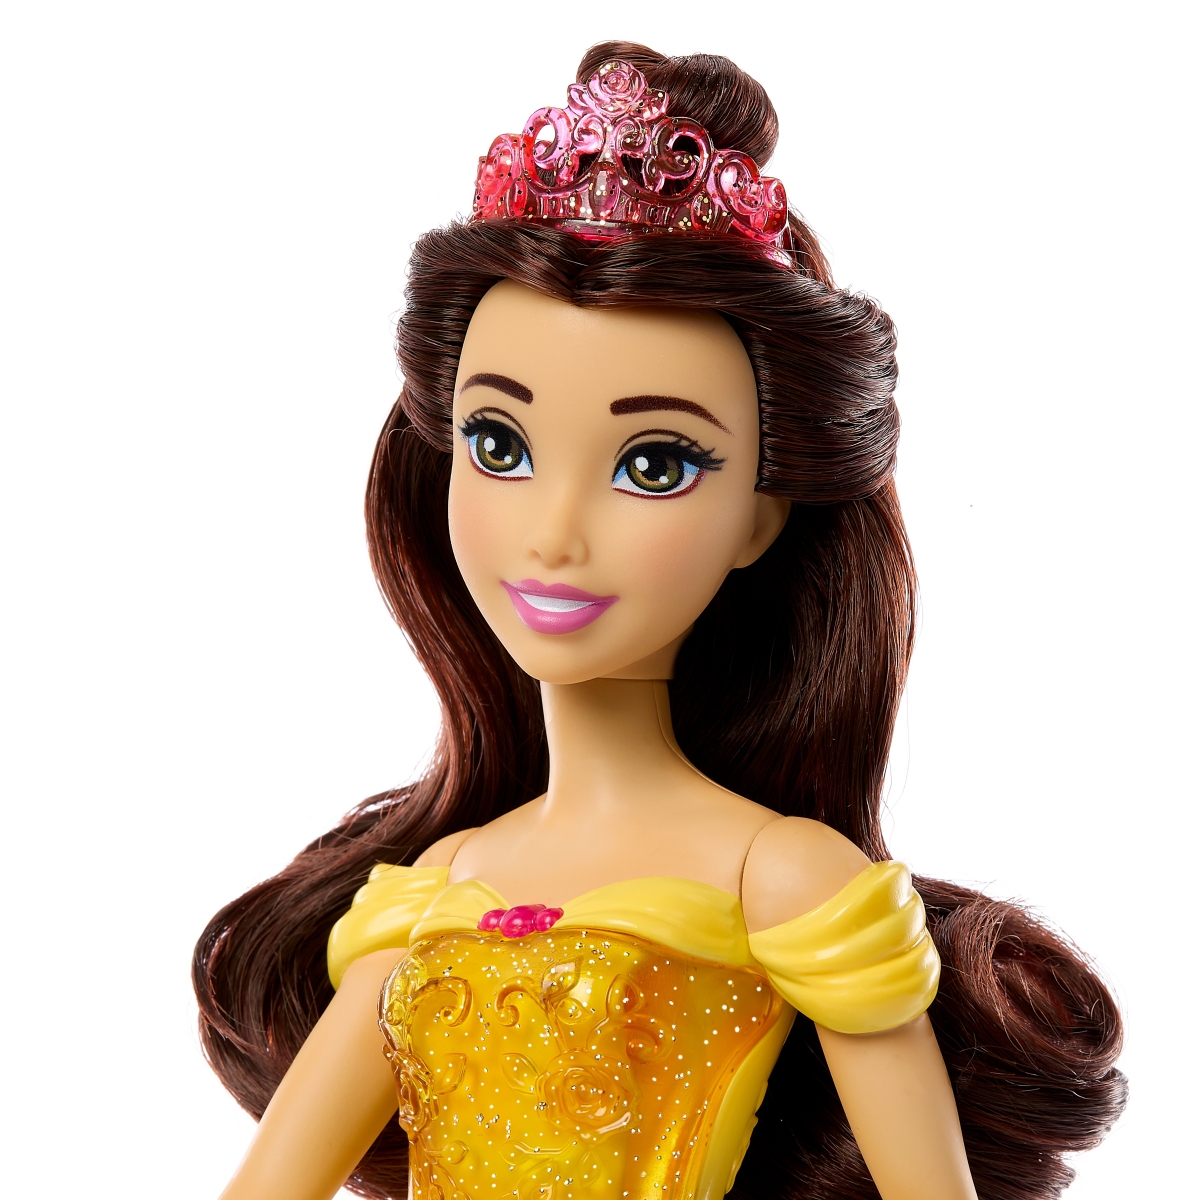 Disney Princess Fashion Core Doll Asst. Belle Lelle HLW11